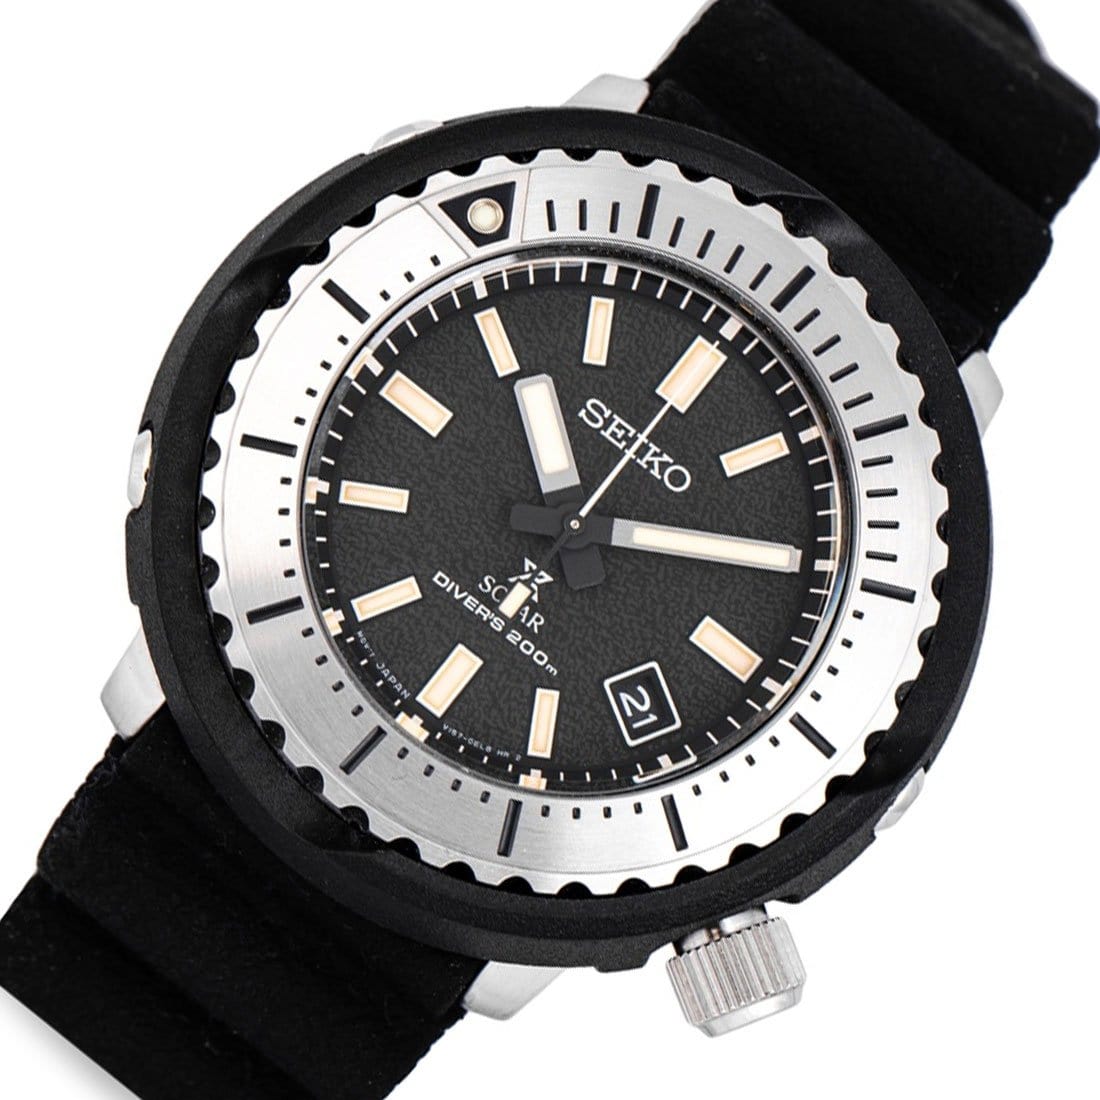 Seiko Prospex Street Series Solar Diver Watch 200M SNE541